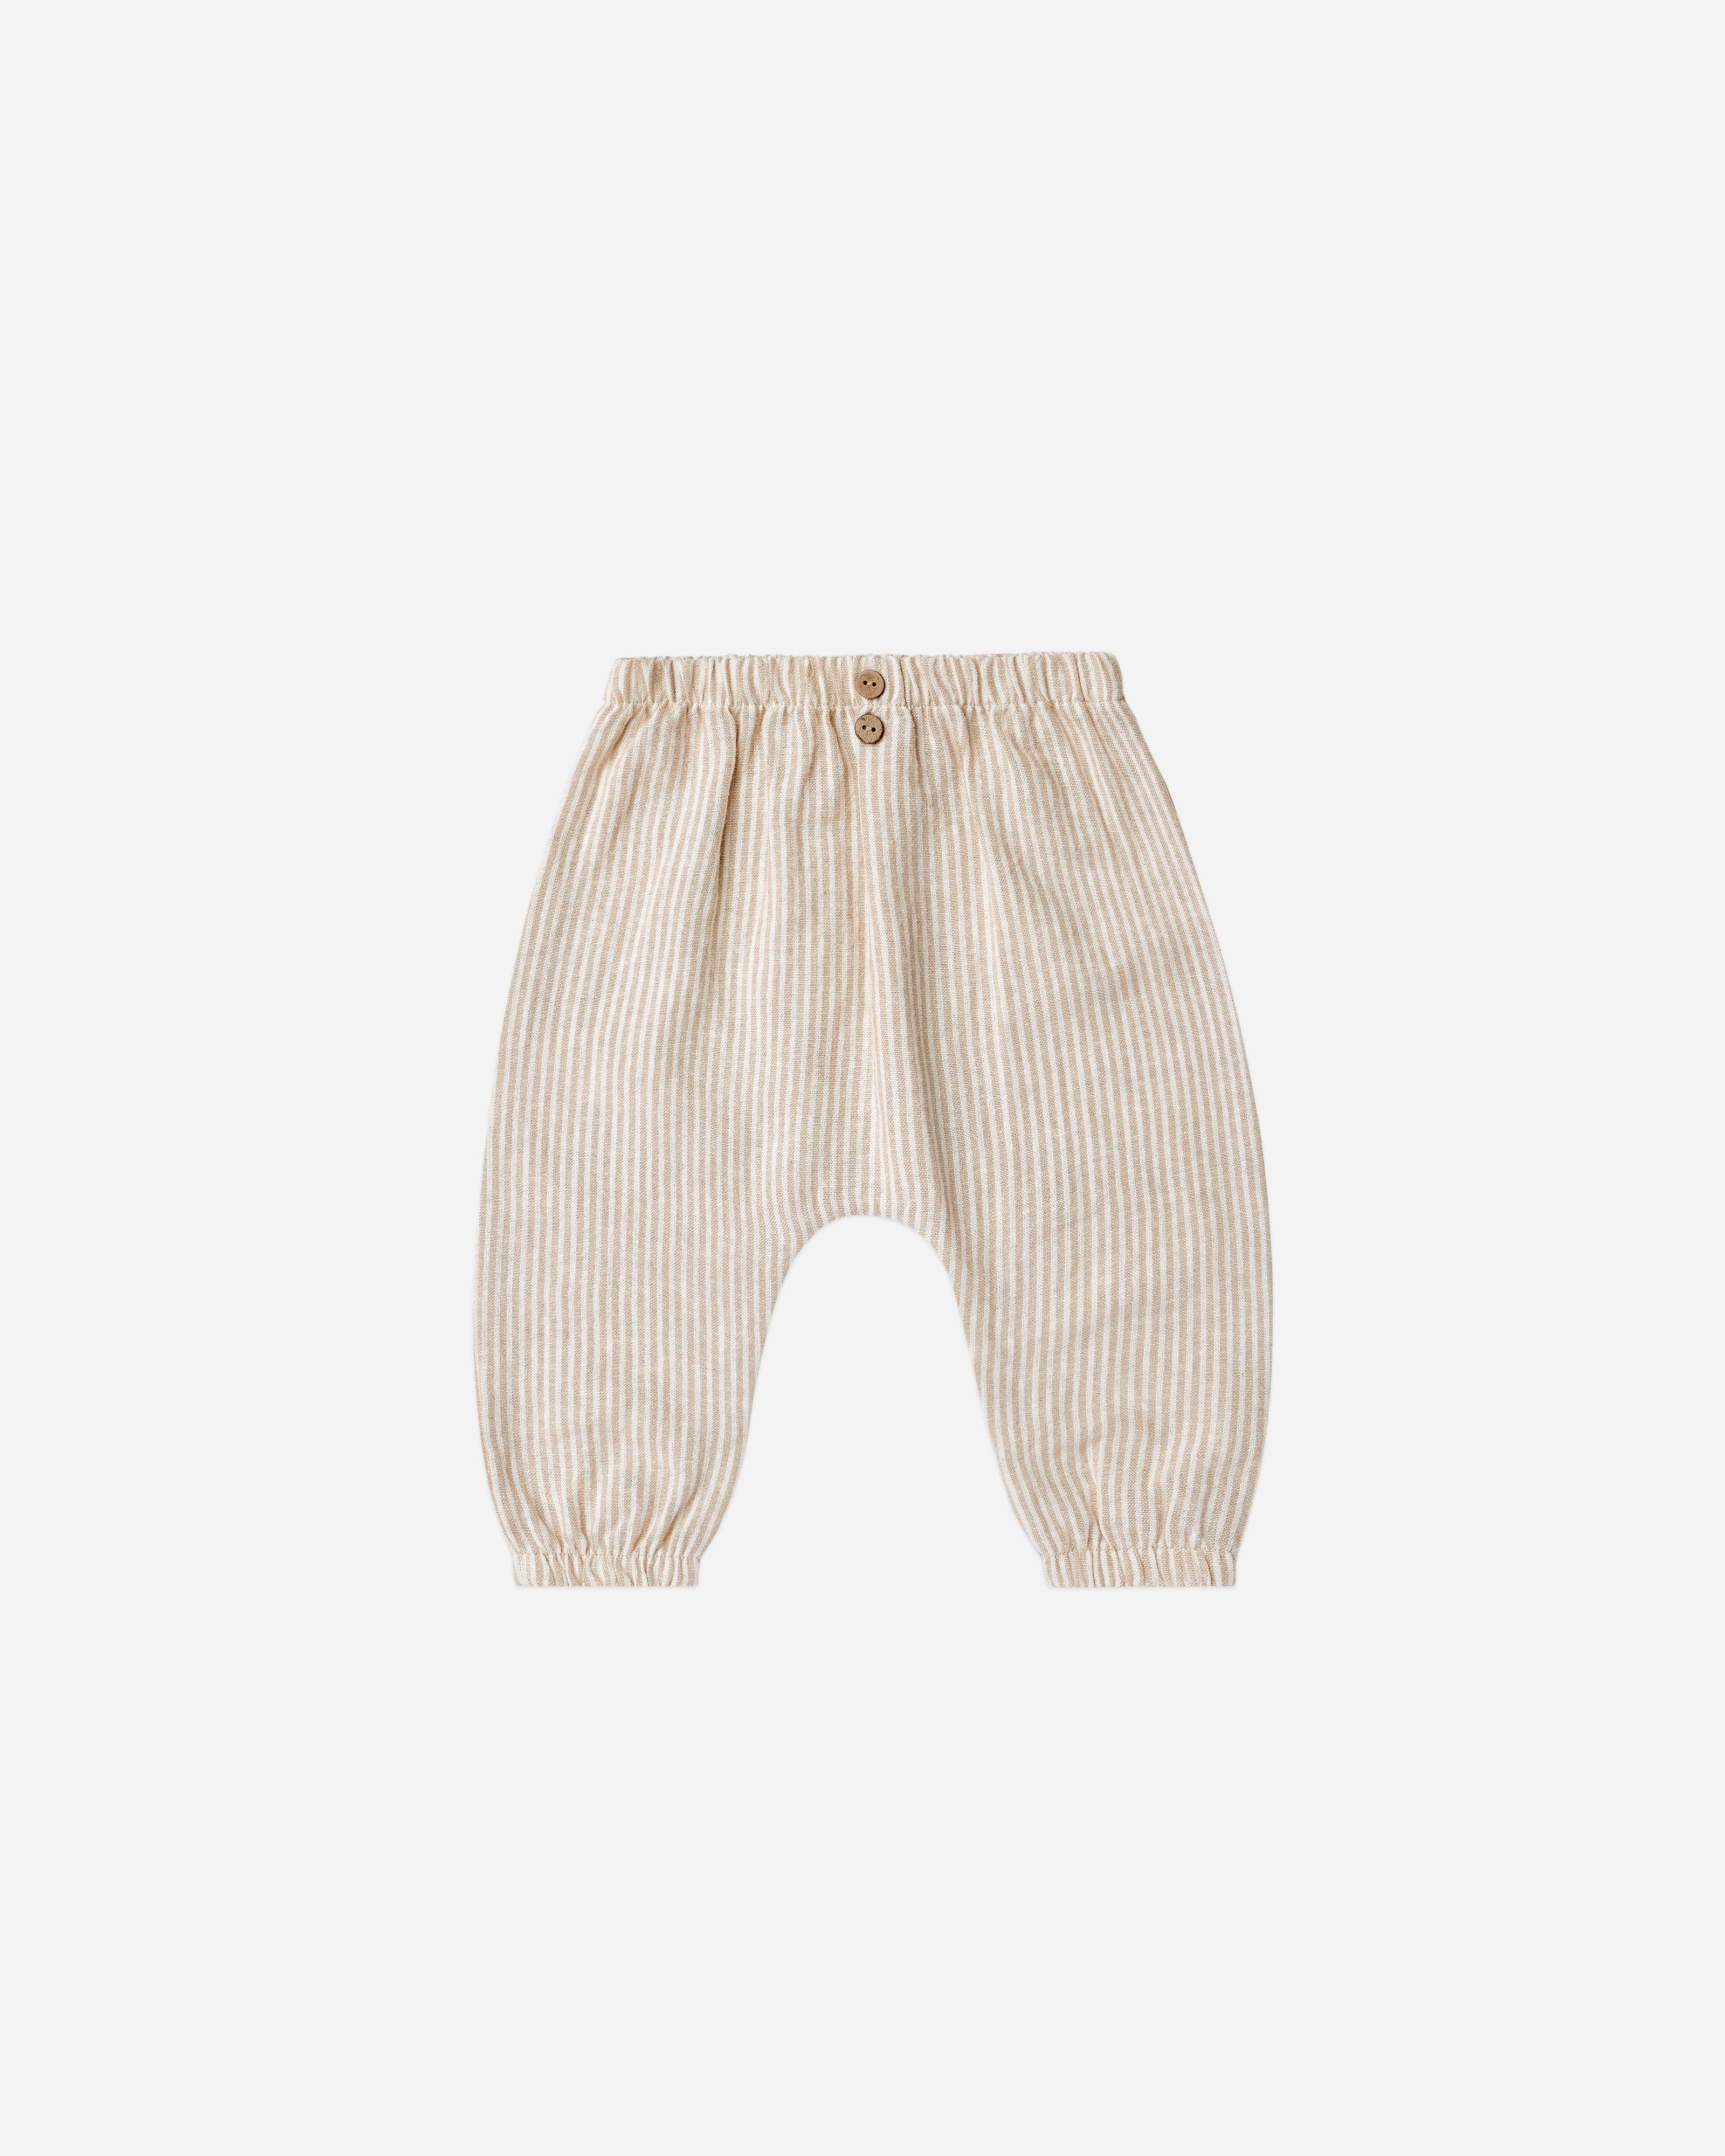 Woven Baby Pant || Sand Stripe | Rylee + Cru